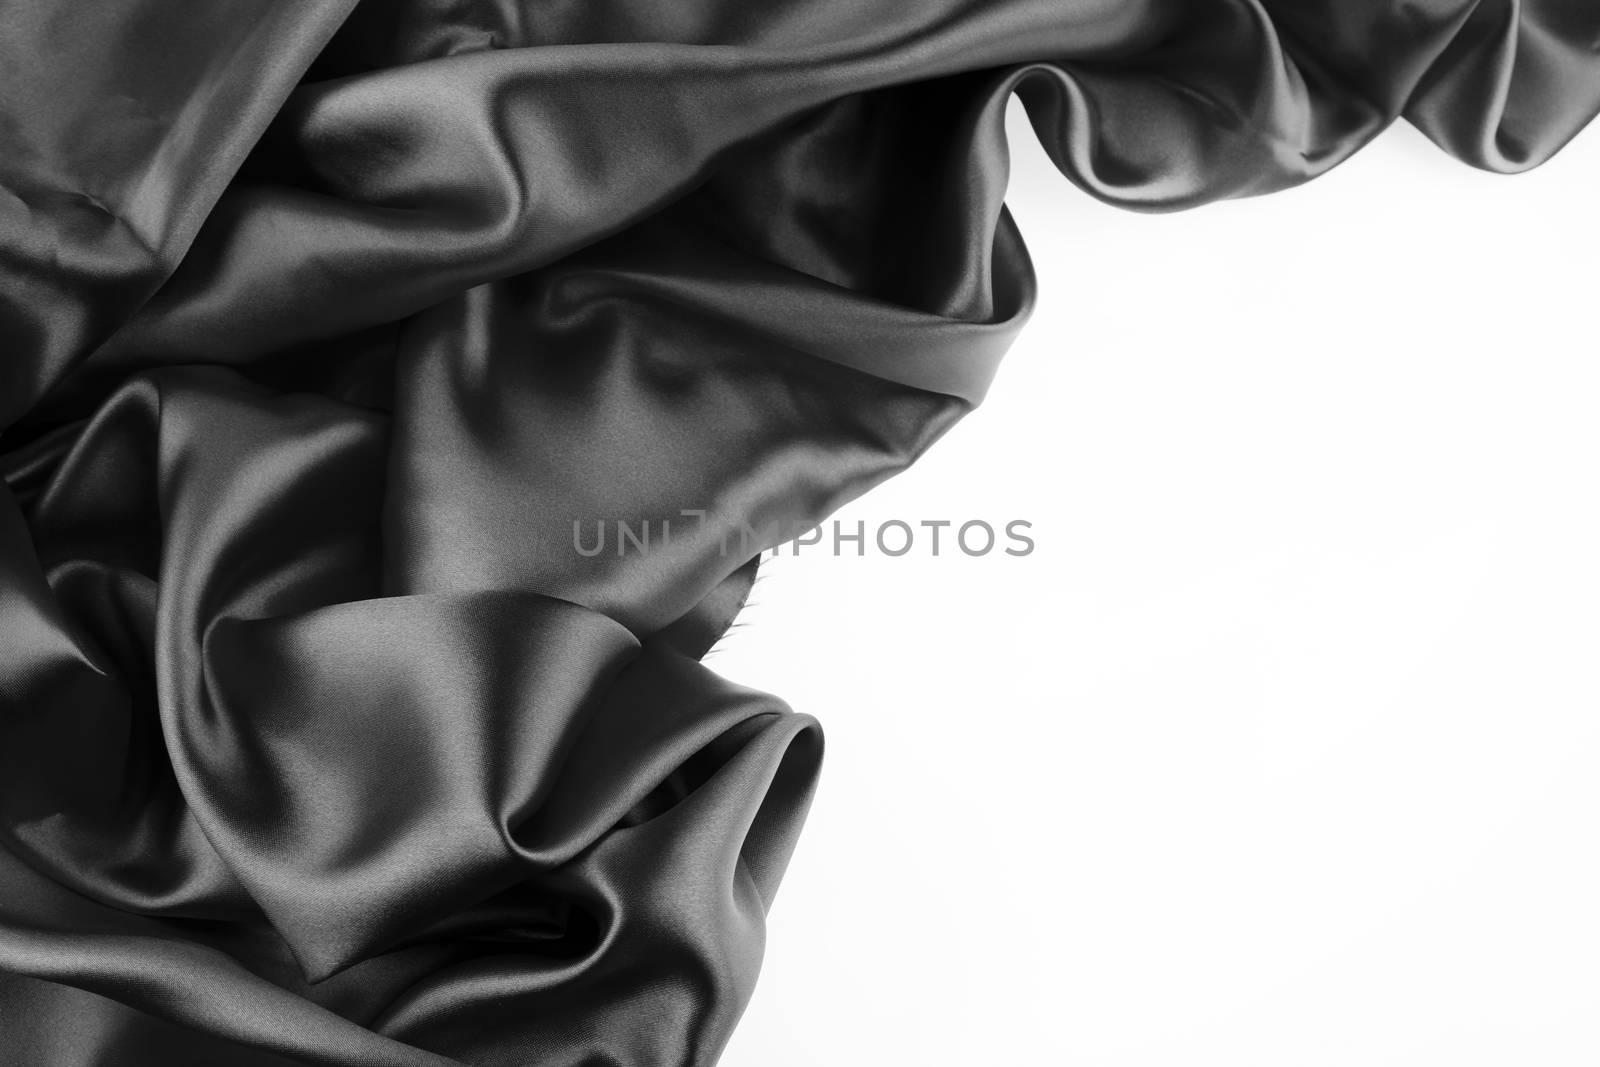 Closeup of rippled black silk fabric on plain background